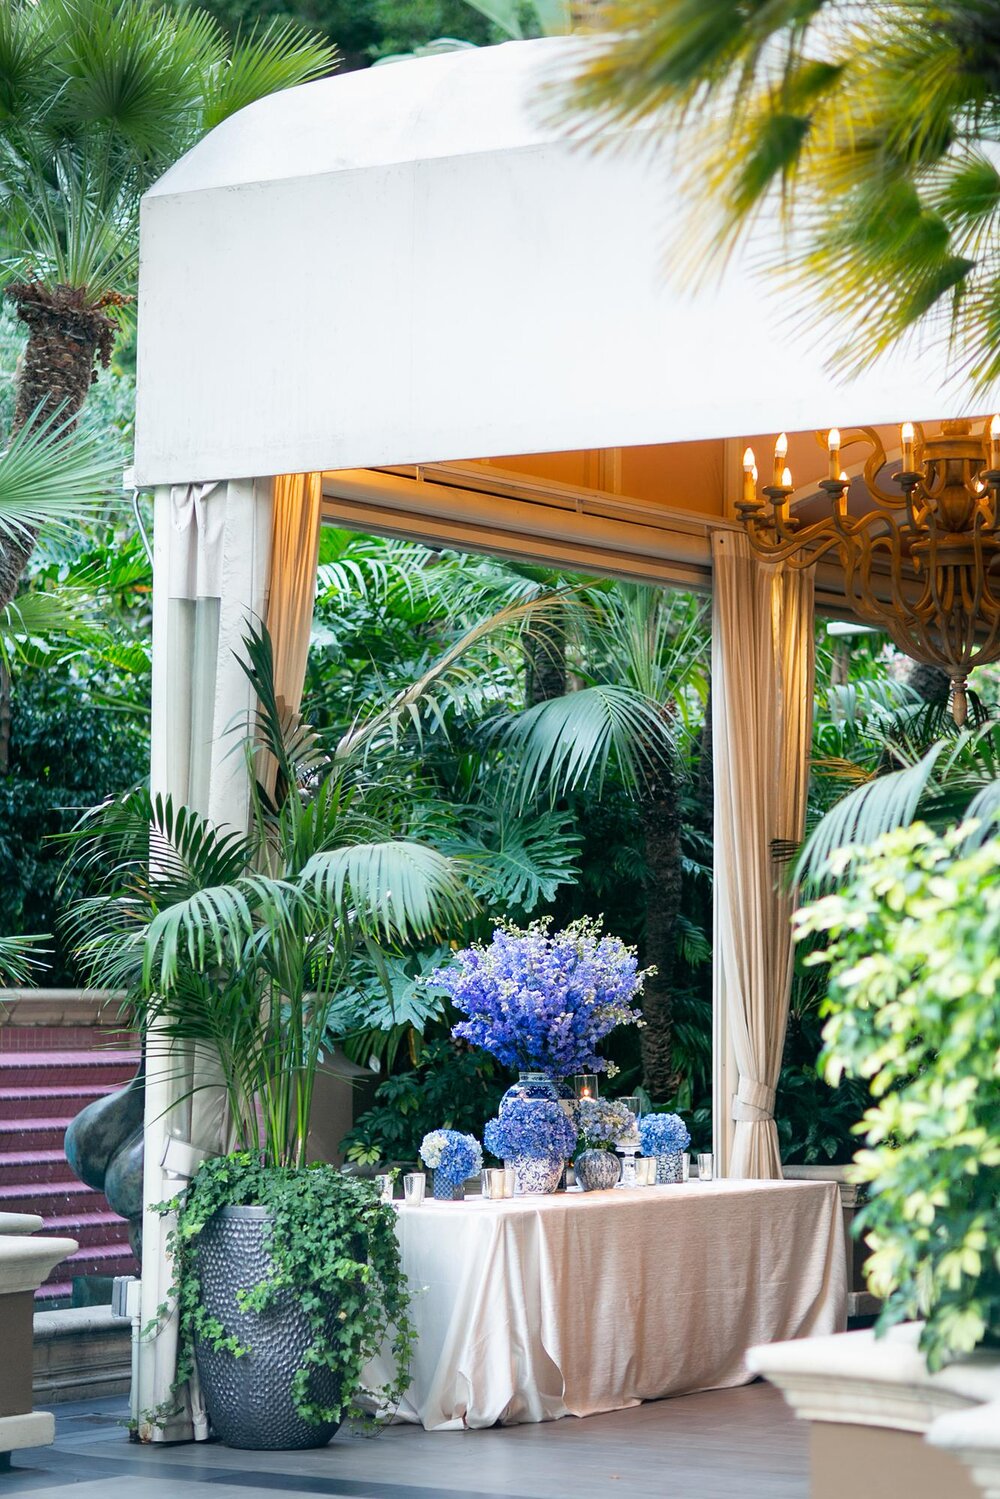 Four Seasons Los Angeles at Beverly Hills Wedding | Miki & Sonja Photography | mikiandsonja.com